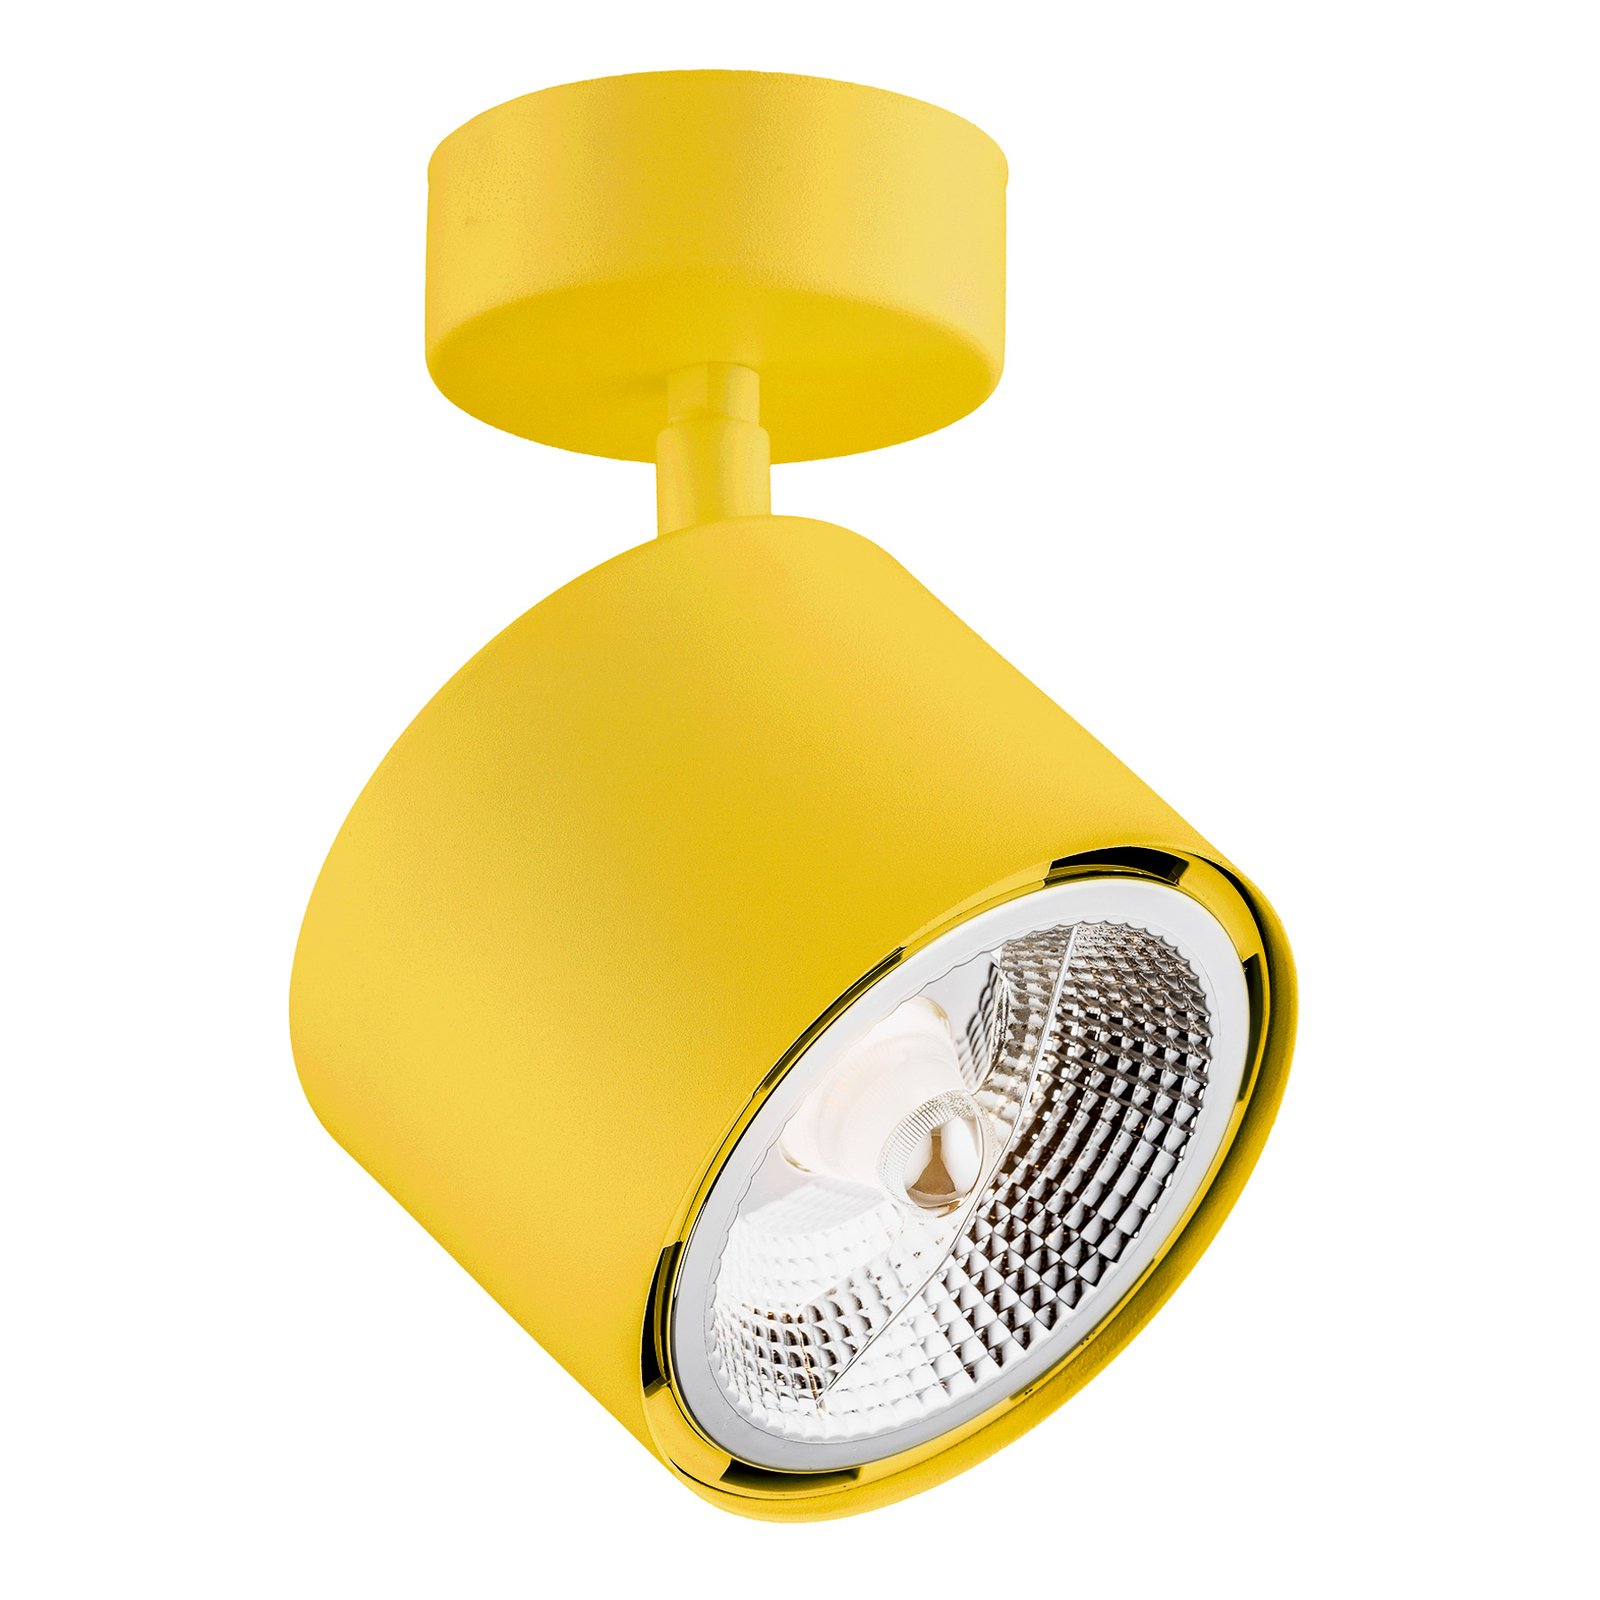 Chloe downlight adjustable 1-bulb, yellow